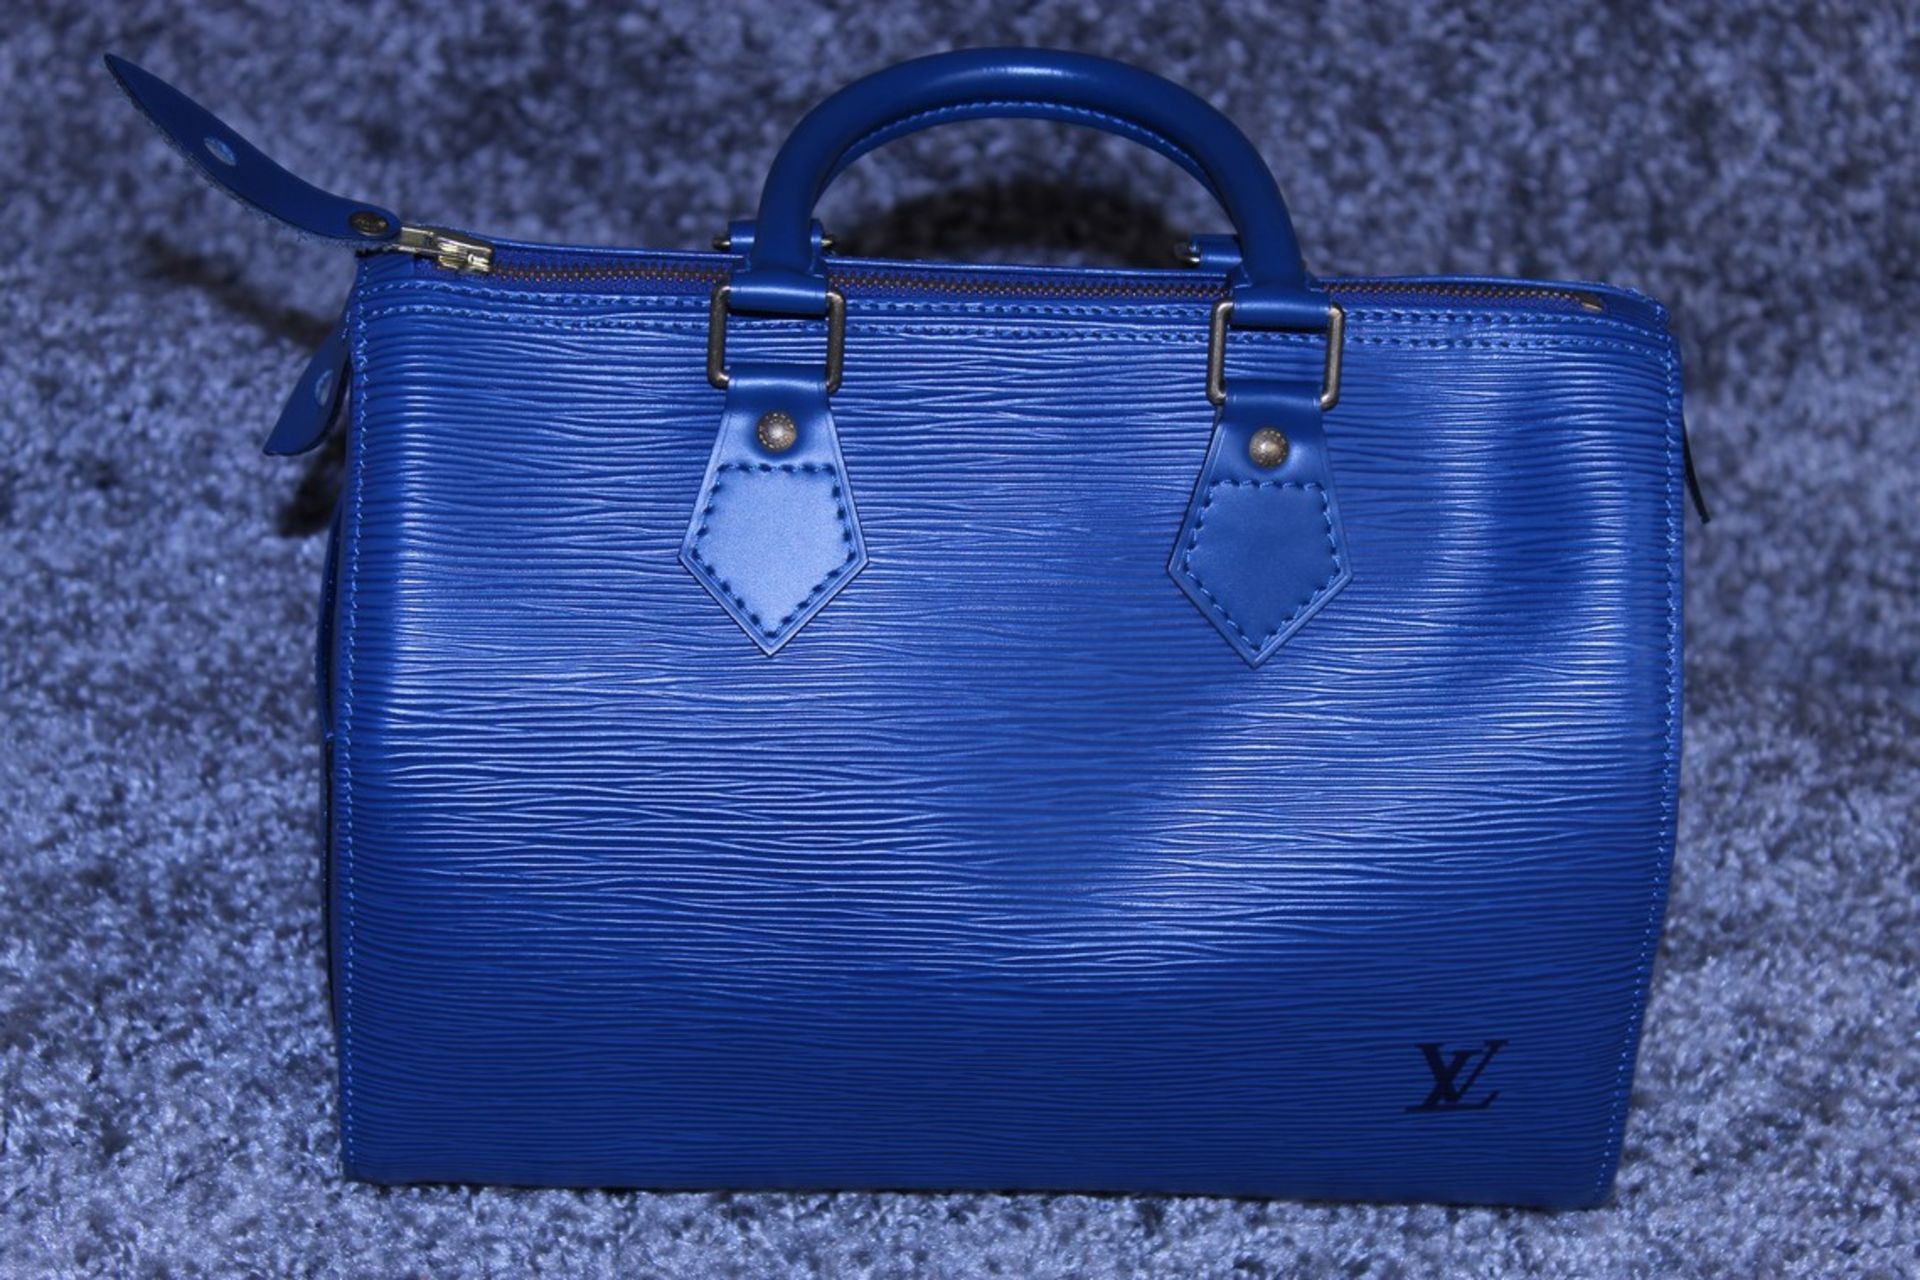 Rrp £1,000 Louis Vuitton Speedy 25 Handbag, Blue Epi Calf Leather, 27X19X15Cm (Production Code